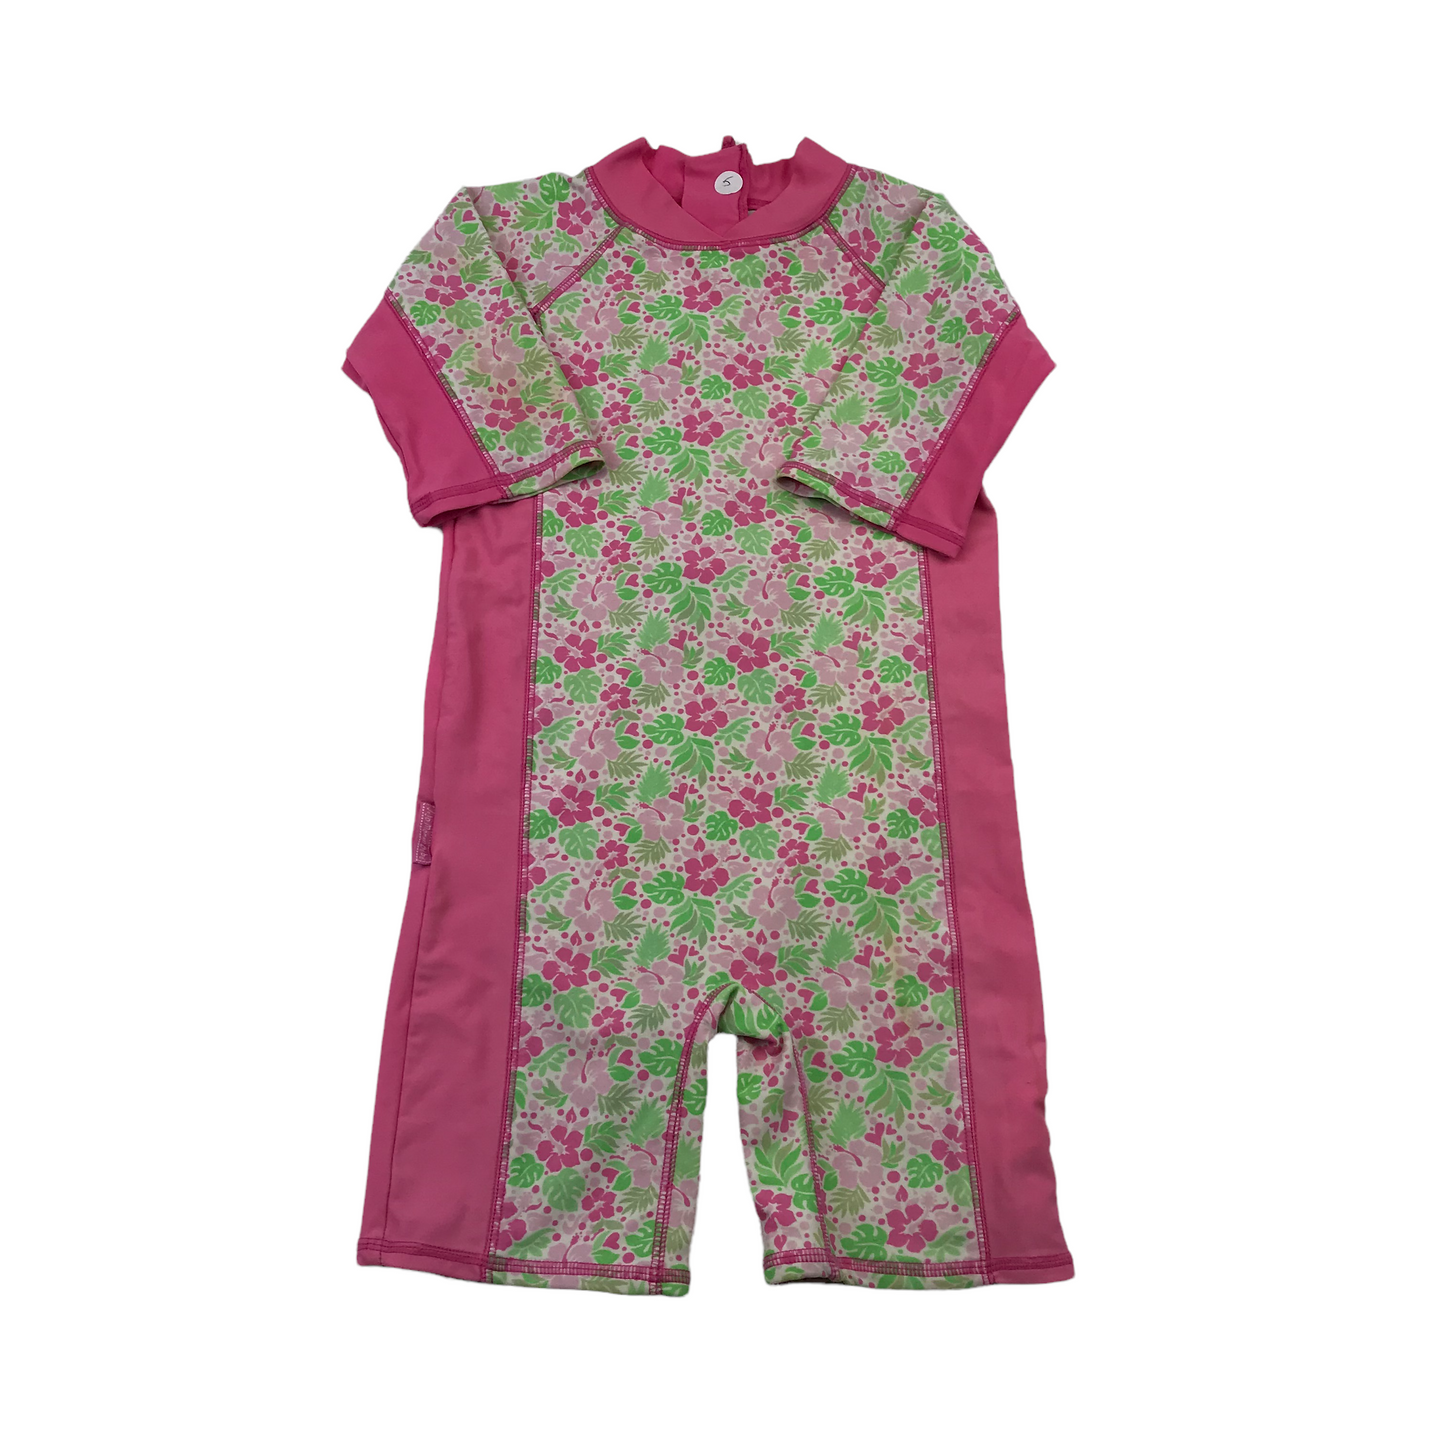 Jojo Maman Bebe Pink Floral 1-Piece Swimsuit Age 5